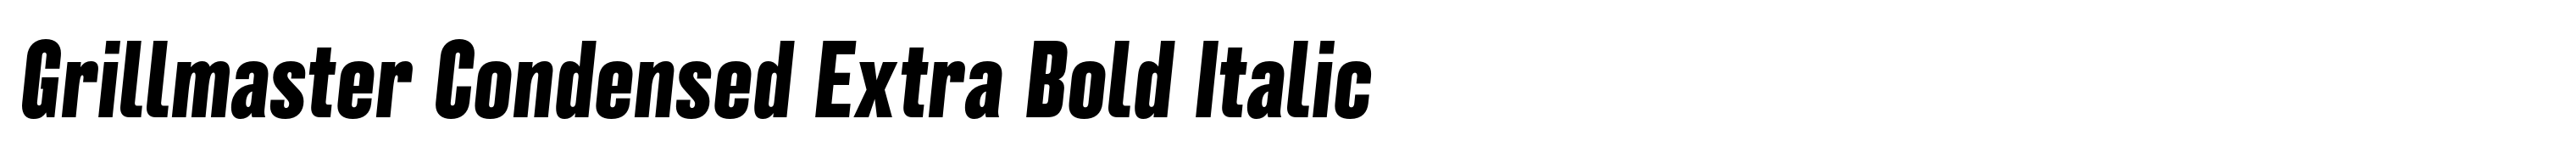 Grillmaster Condensed Extra Bold Italic